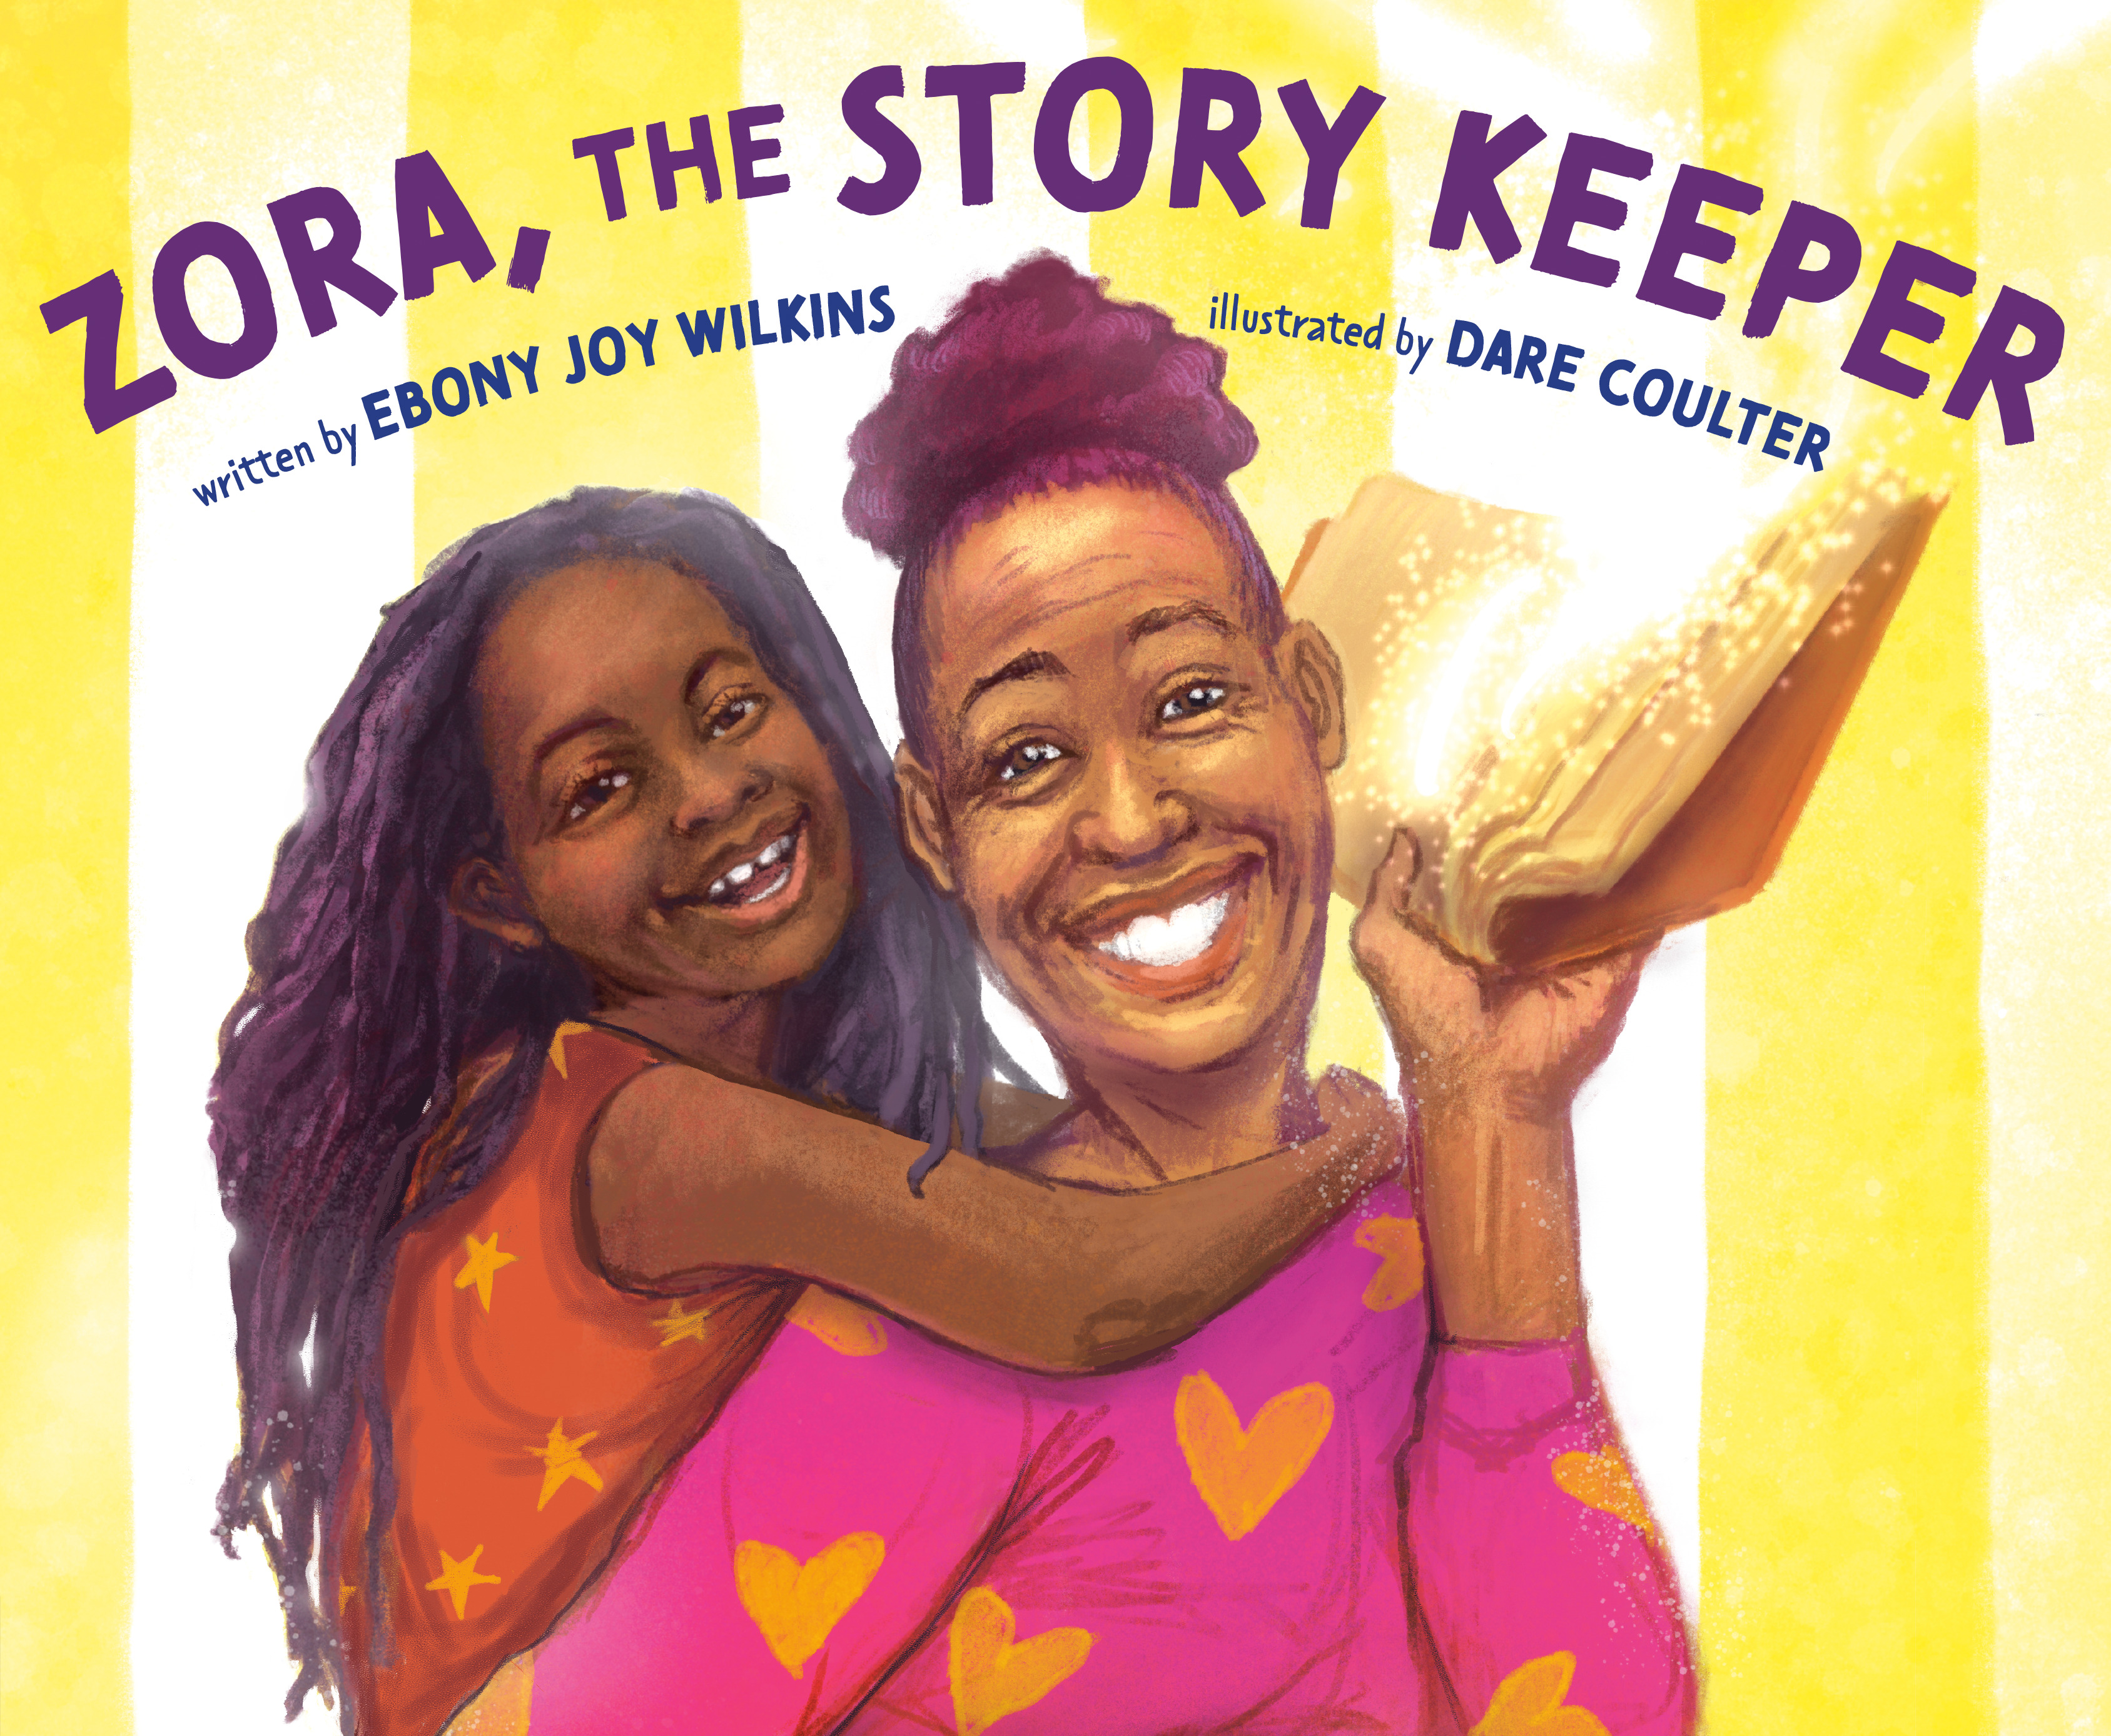 Zora, the Story Keeper | Wilkins, Ebony Joy (Auteur) | Coulter, Dare (Illustrateur)